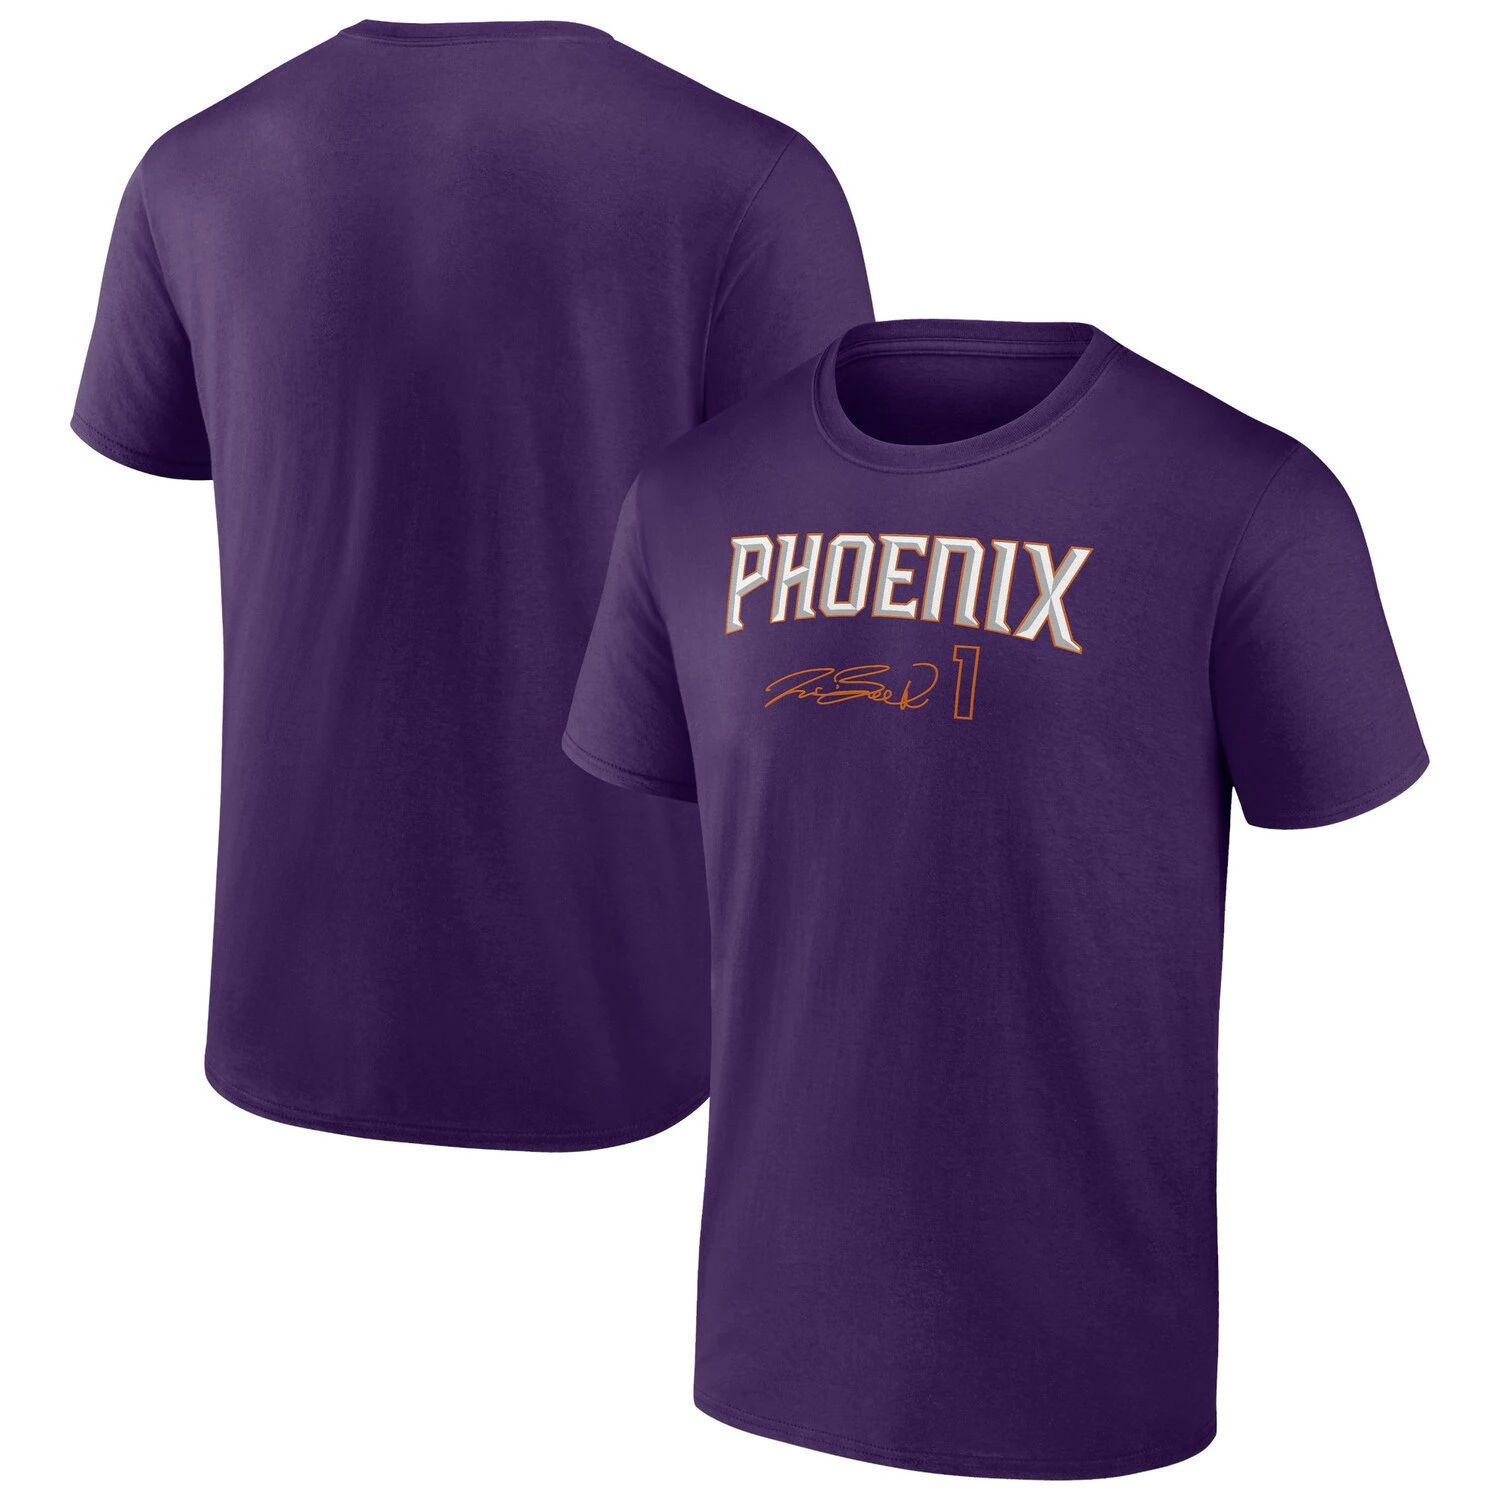 Мужская фиолетовая футболка с именем и номером Devin Booker Phoenix Suns Fanatics 2021 new mens american basketball phoenix devin booker jersey